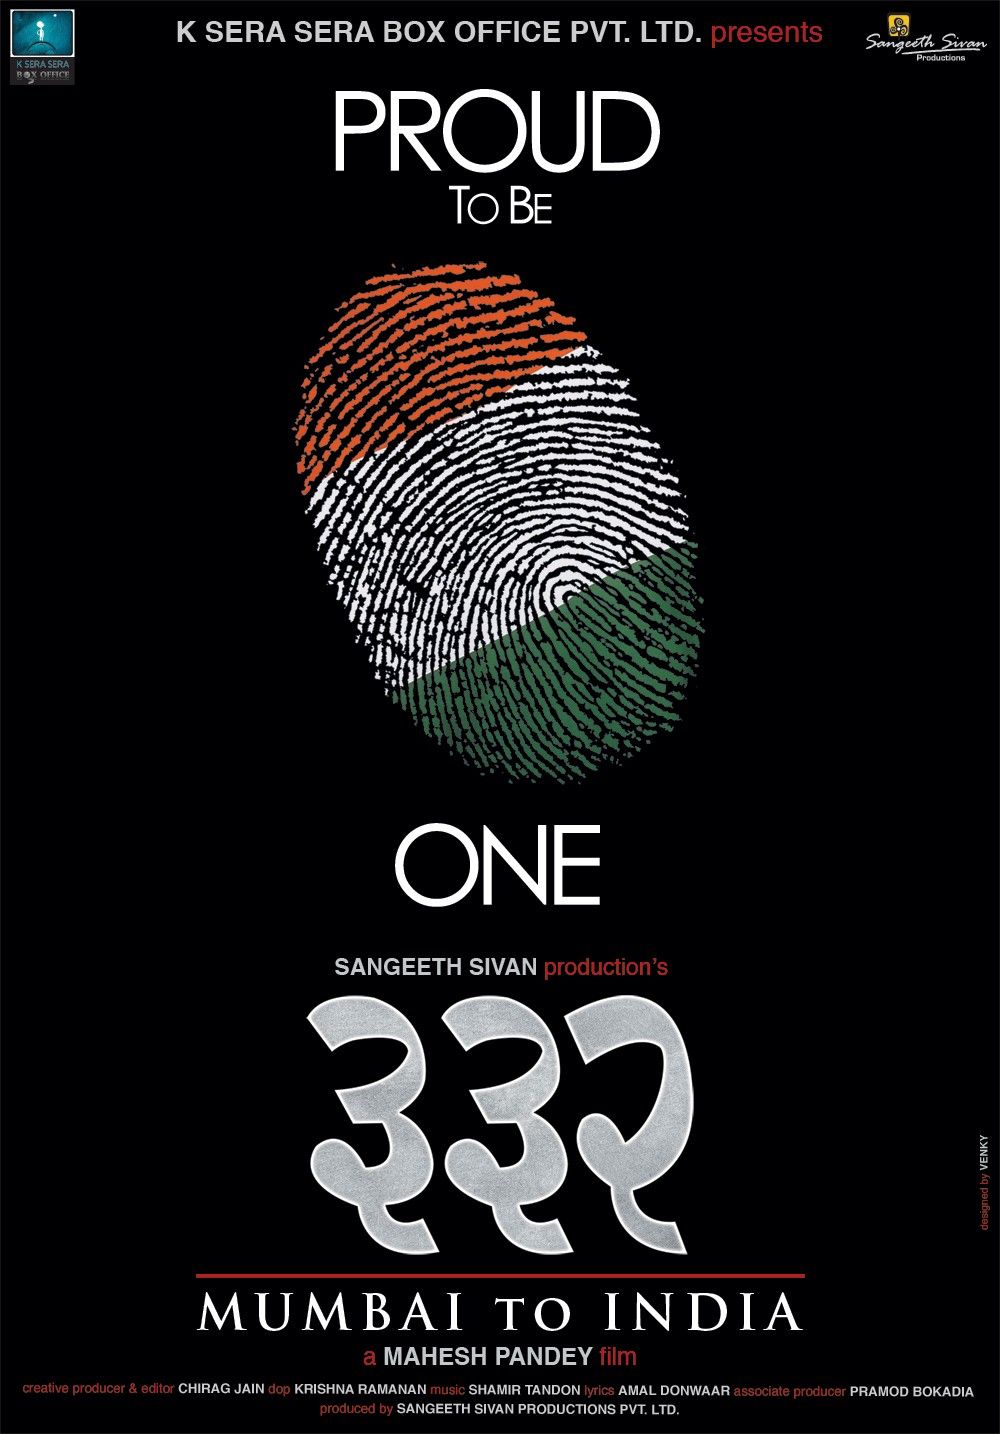 Extra Large Movie Poster Image for 332: Mumbai to India (#5 of 6)